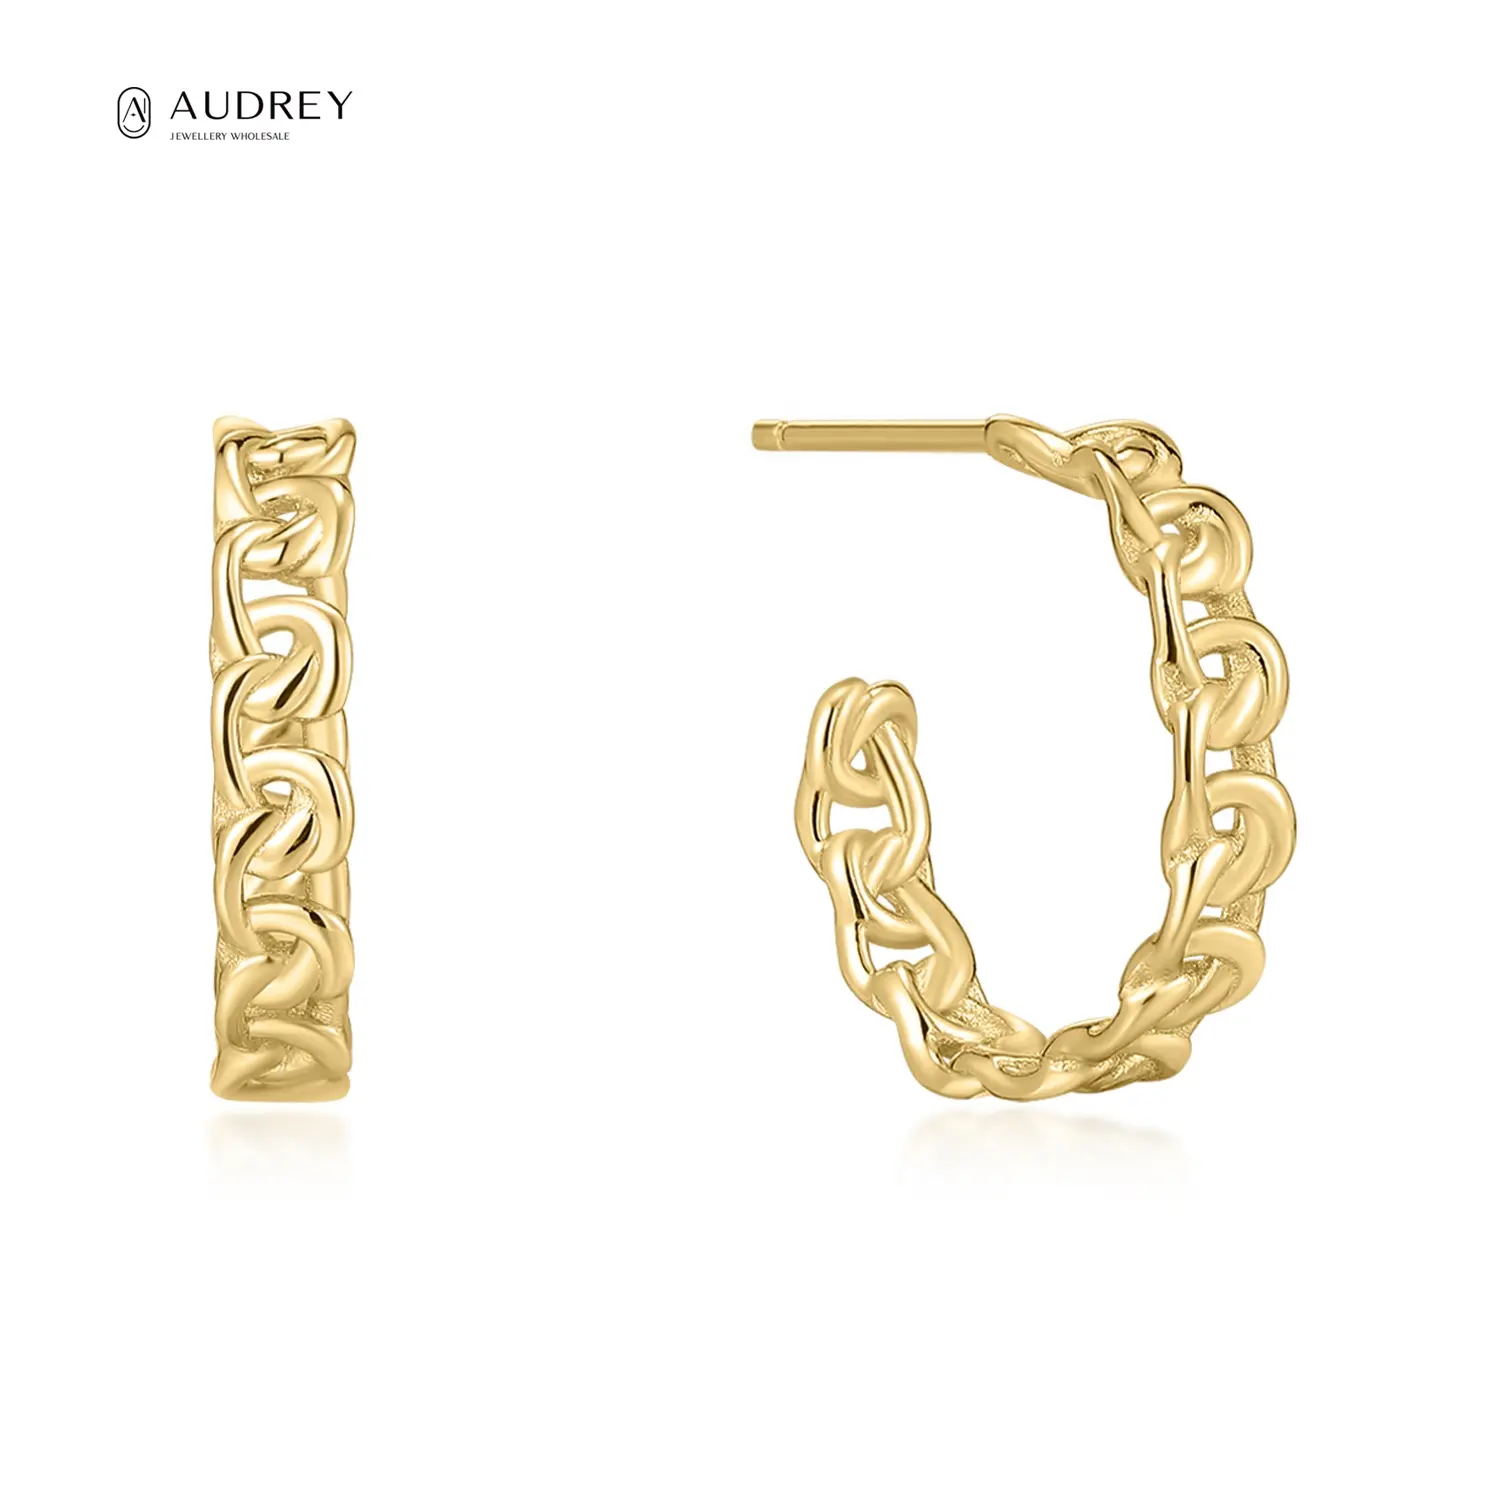 Audrey Fine Jewelry Designer Luxury Openwork 14k Plated Gold 925 Silver Stud Earrings 14 Karat Gold Statement Hoop C Earring